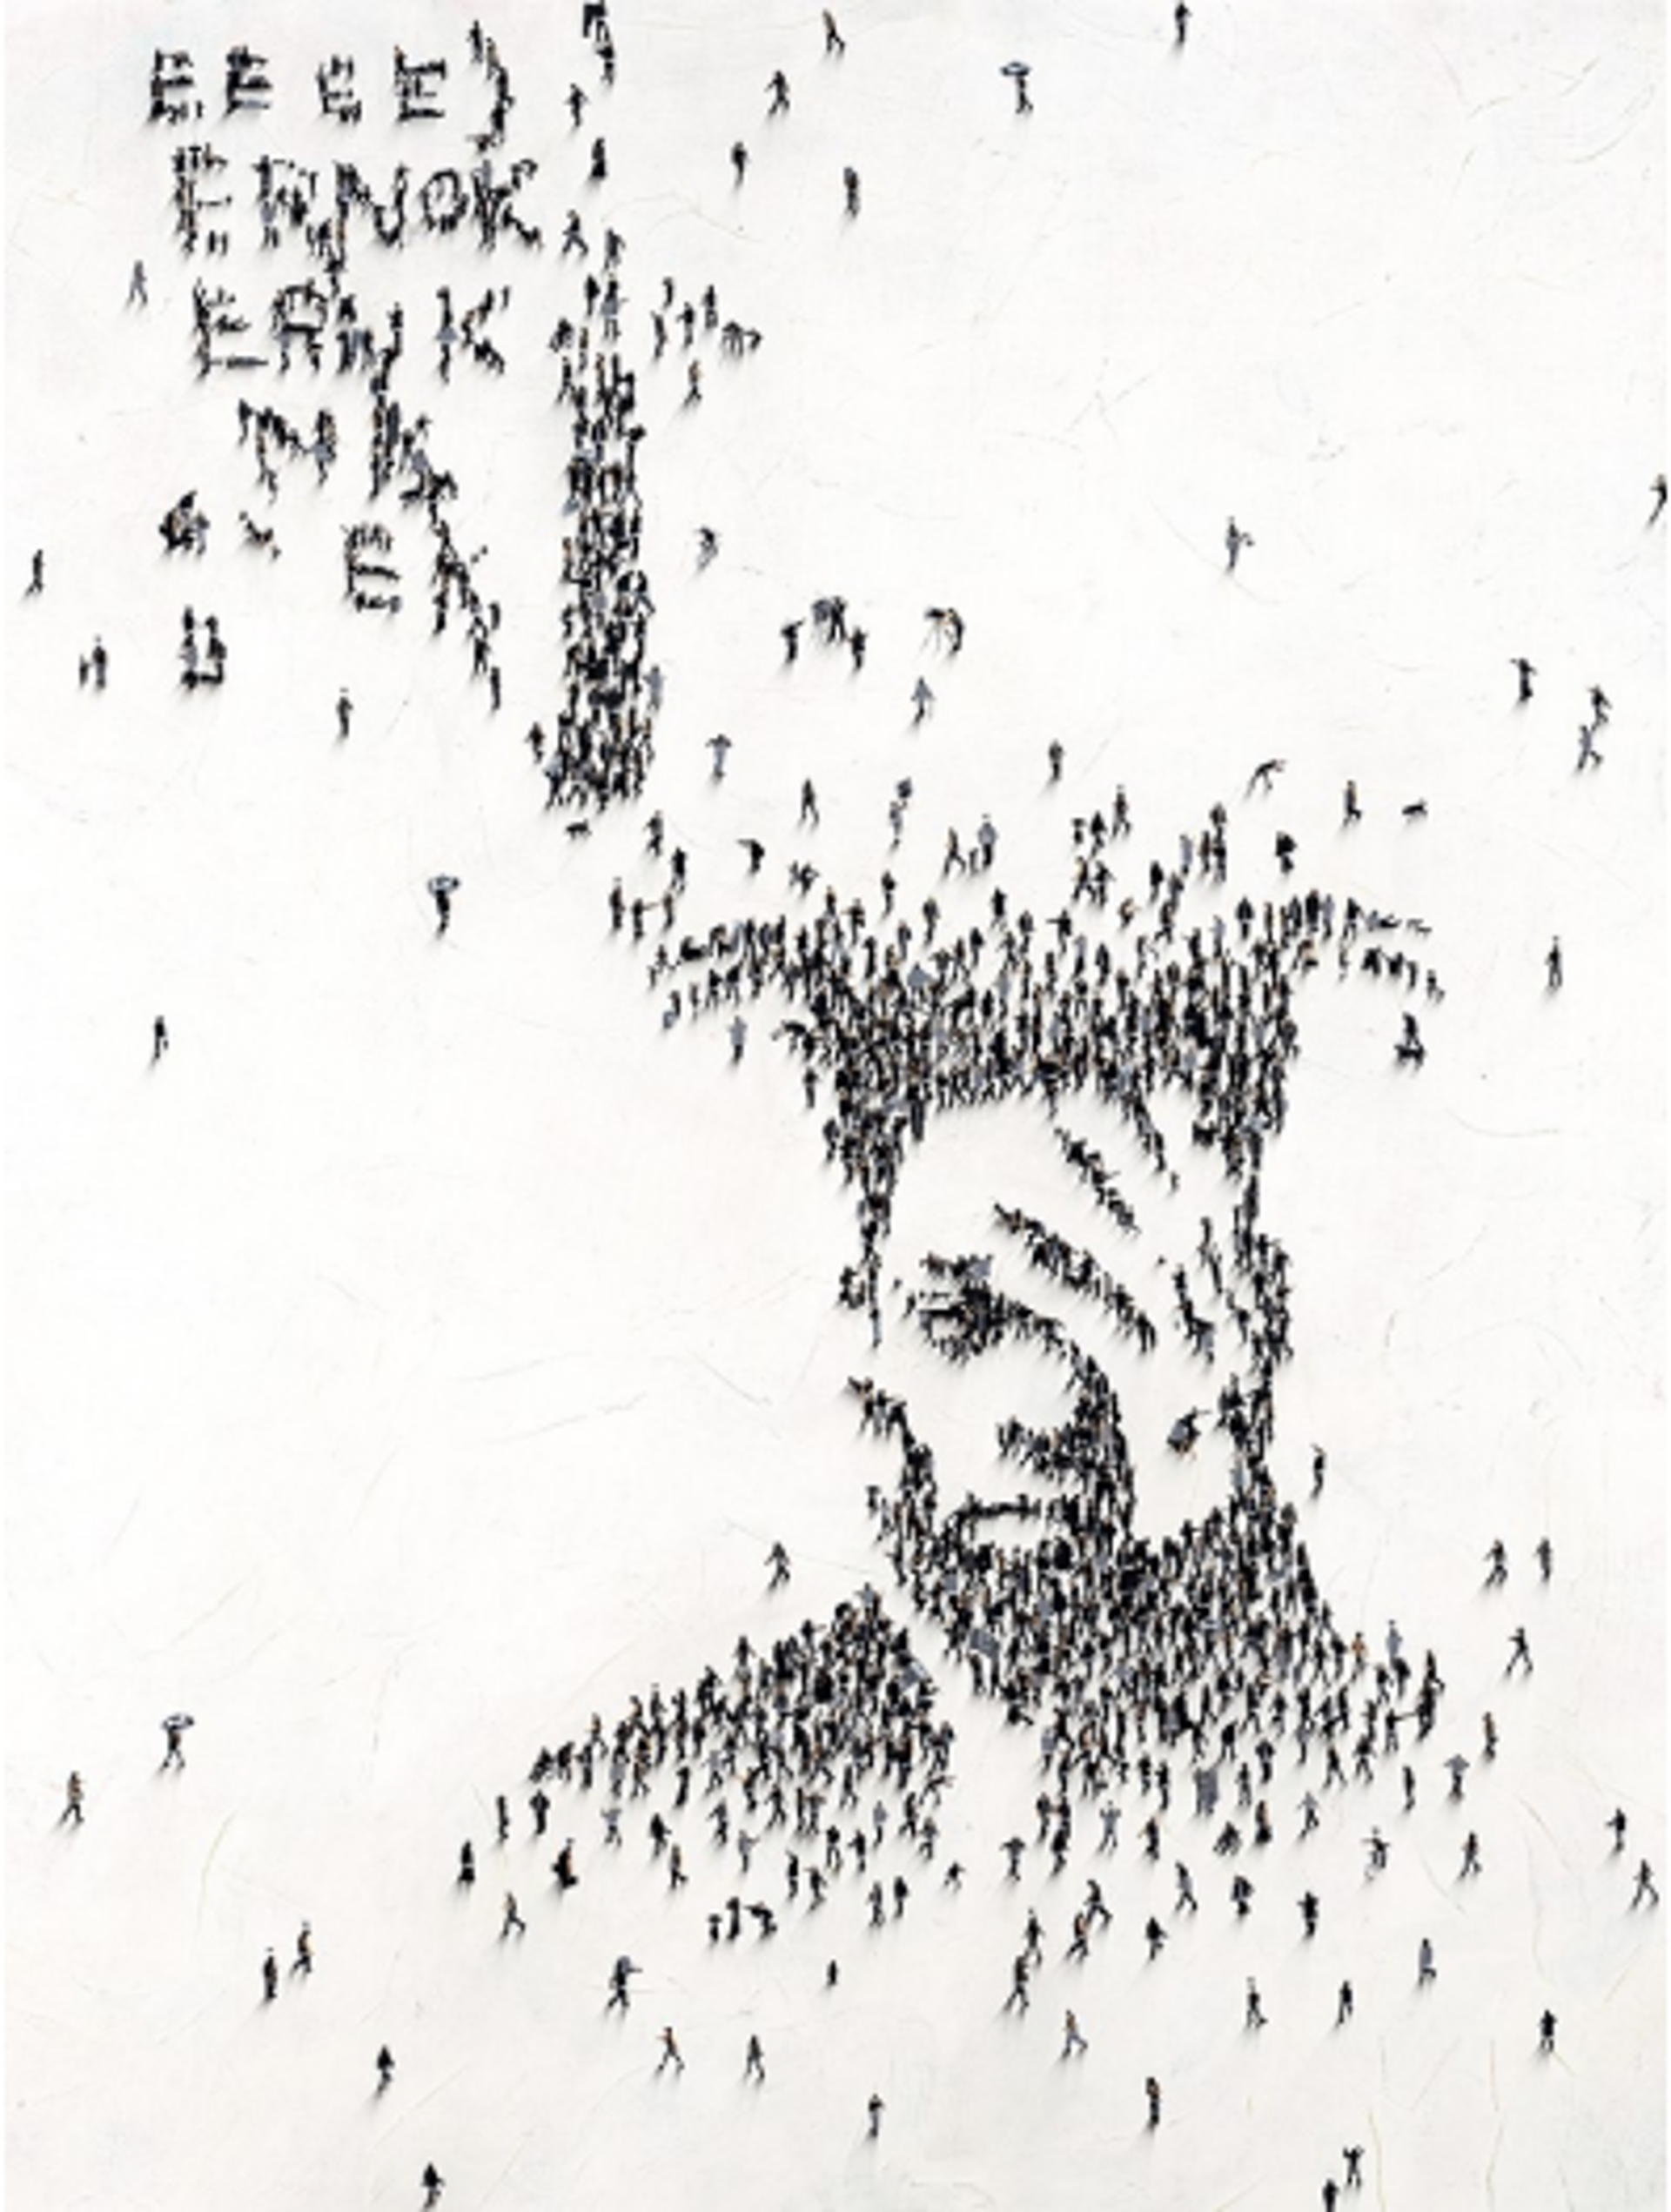 The Walk (Basquiat) by Craig Alan